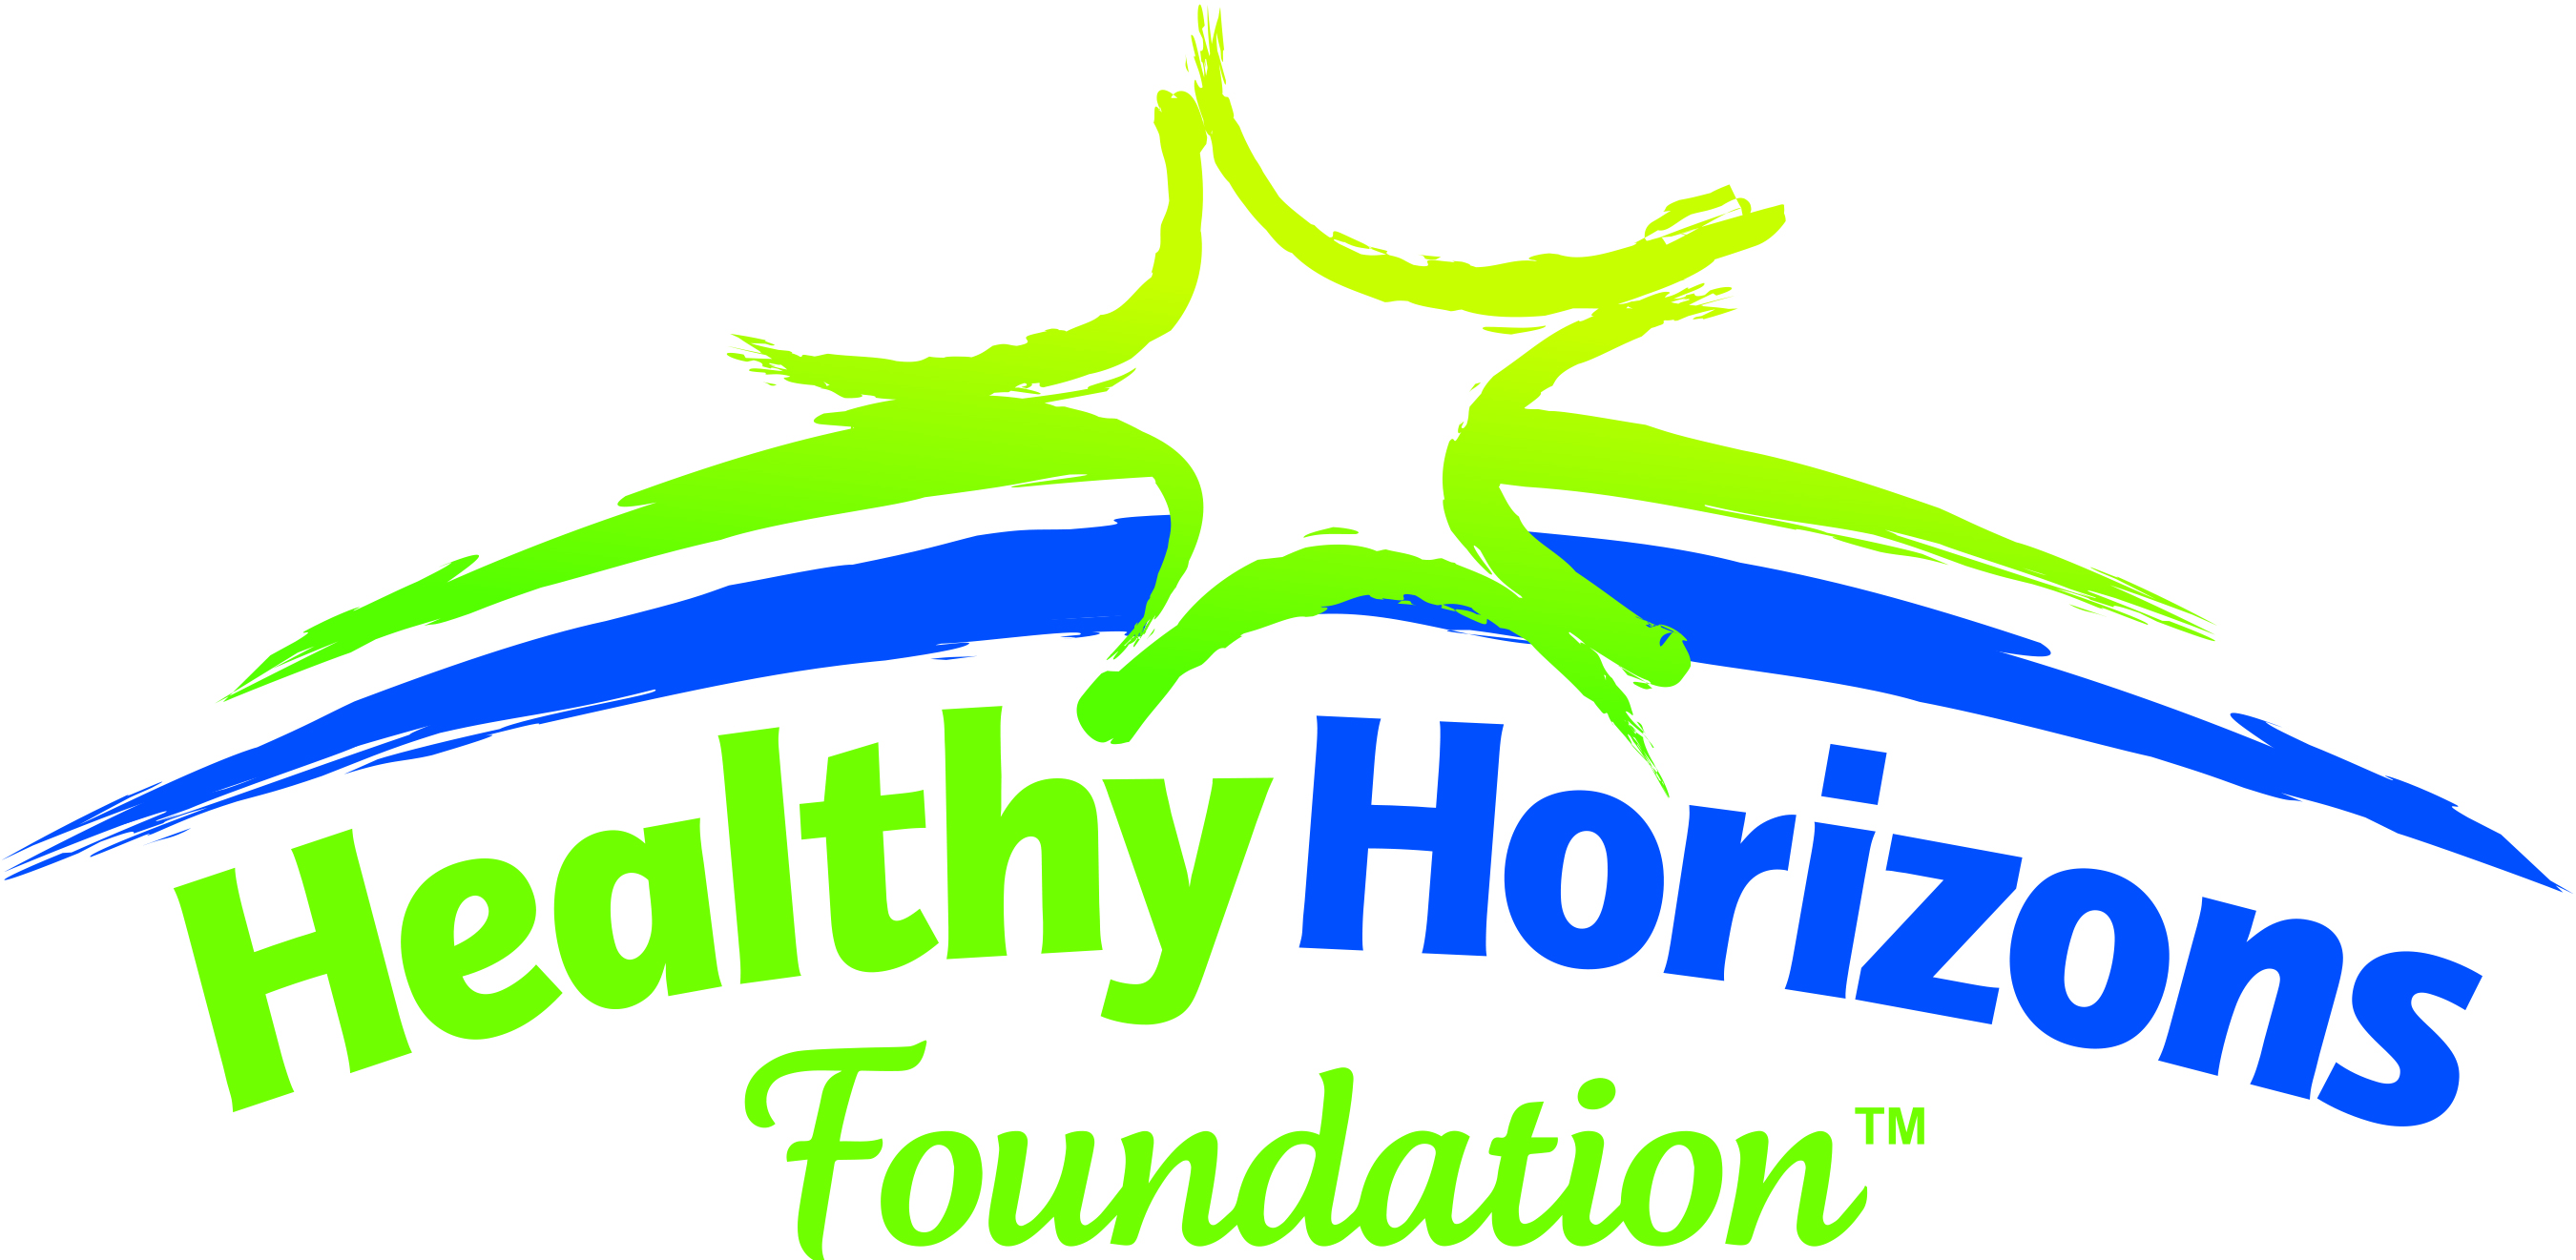 Healthy Horizons Foundation Logo.jpg (1.56 MB)